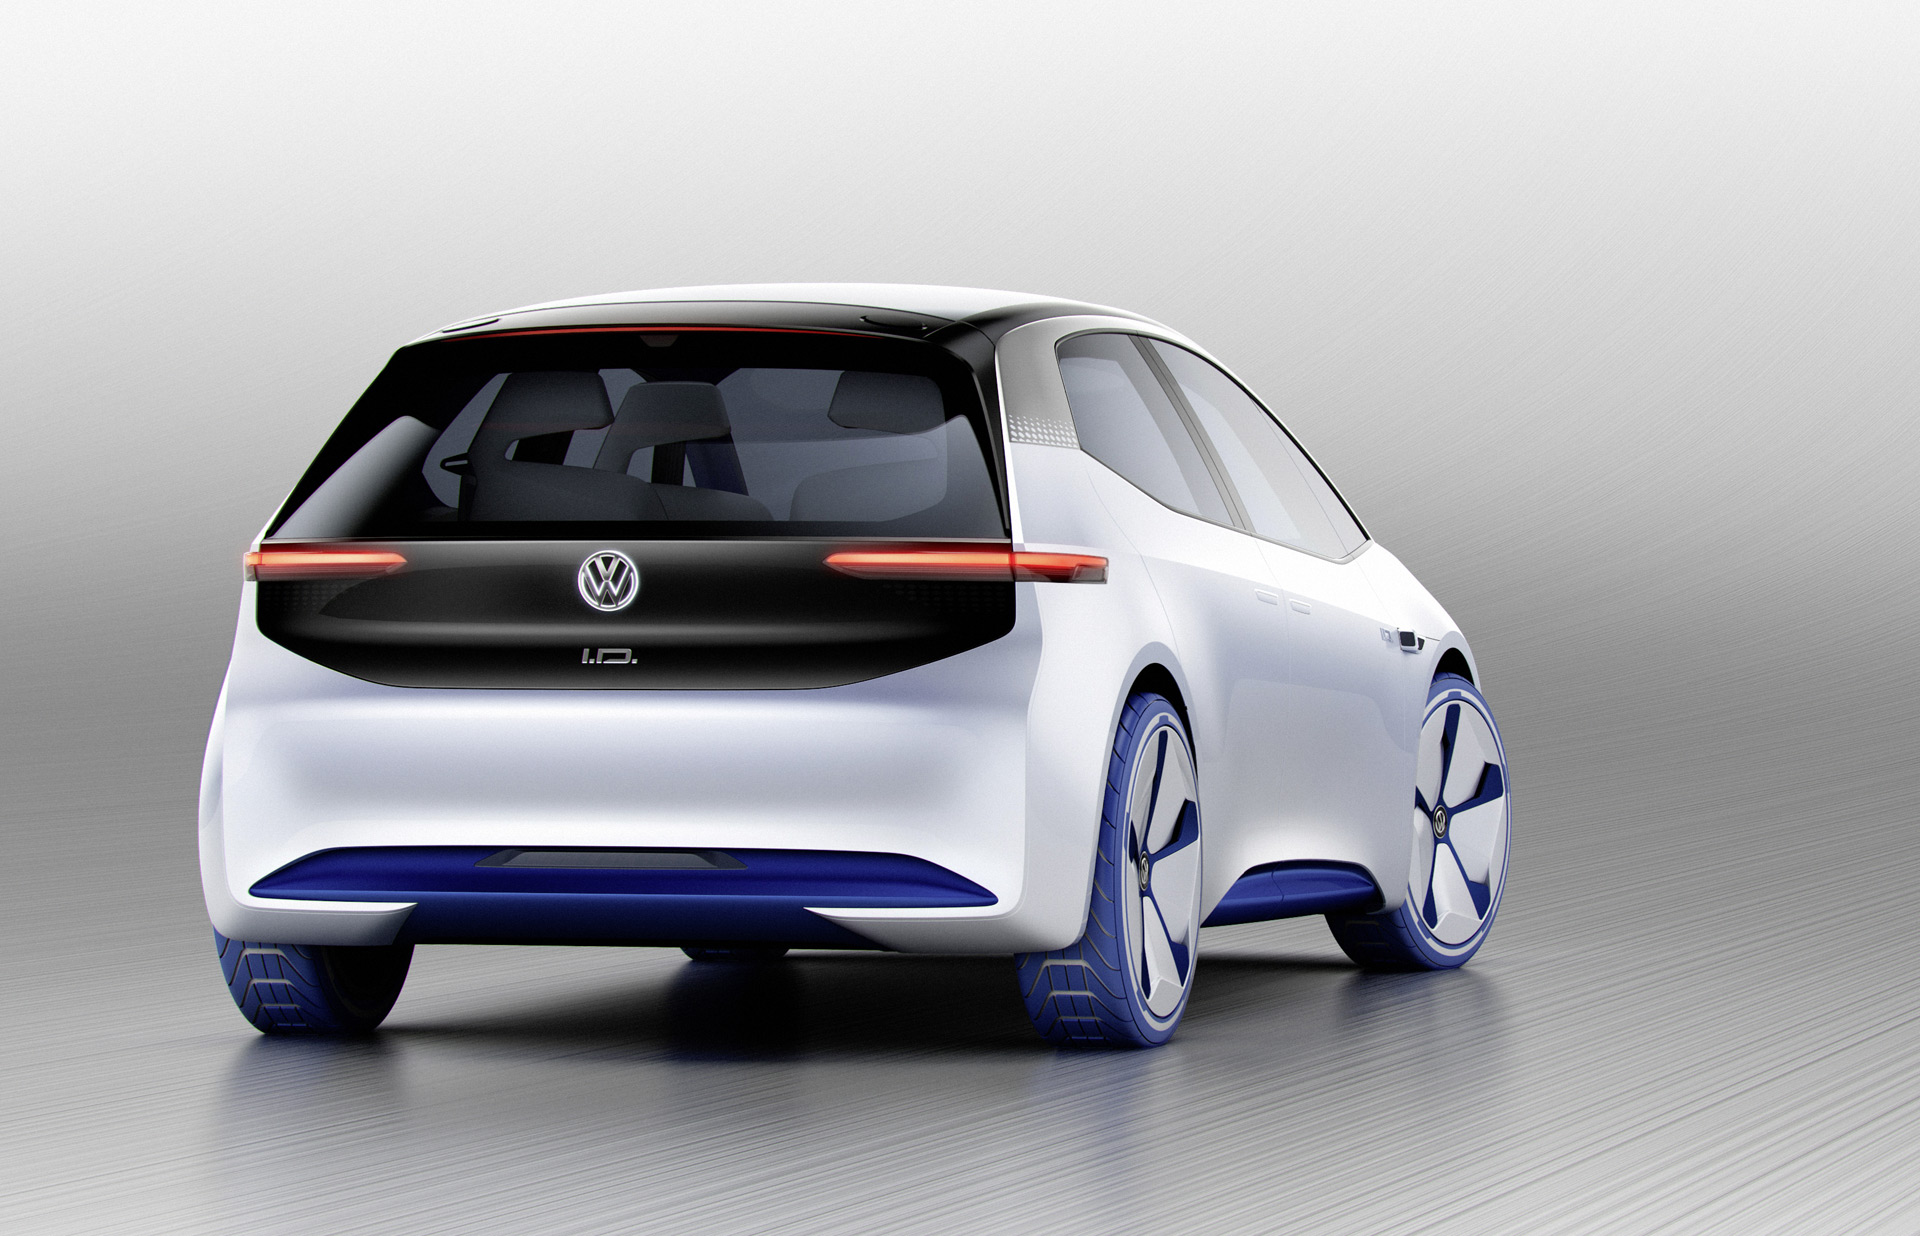 Ahead of electric-car production, VW demands suppliers cut carbon